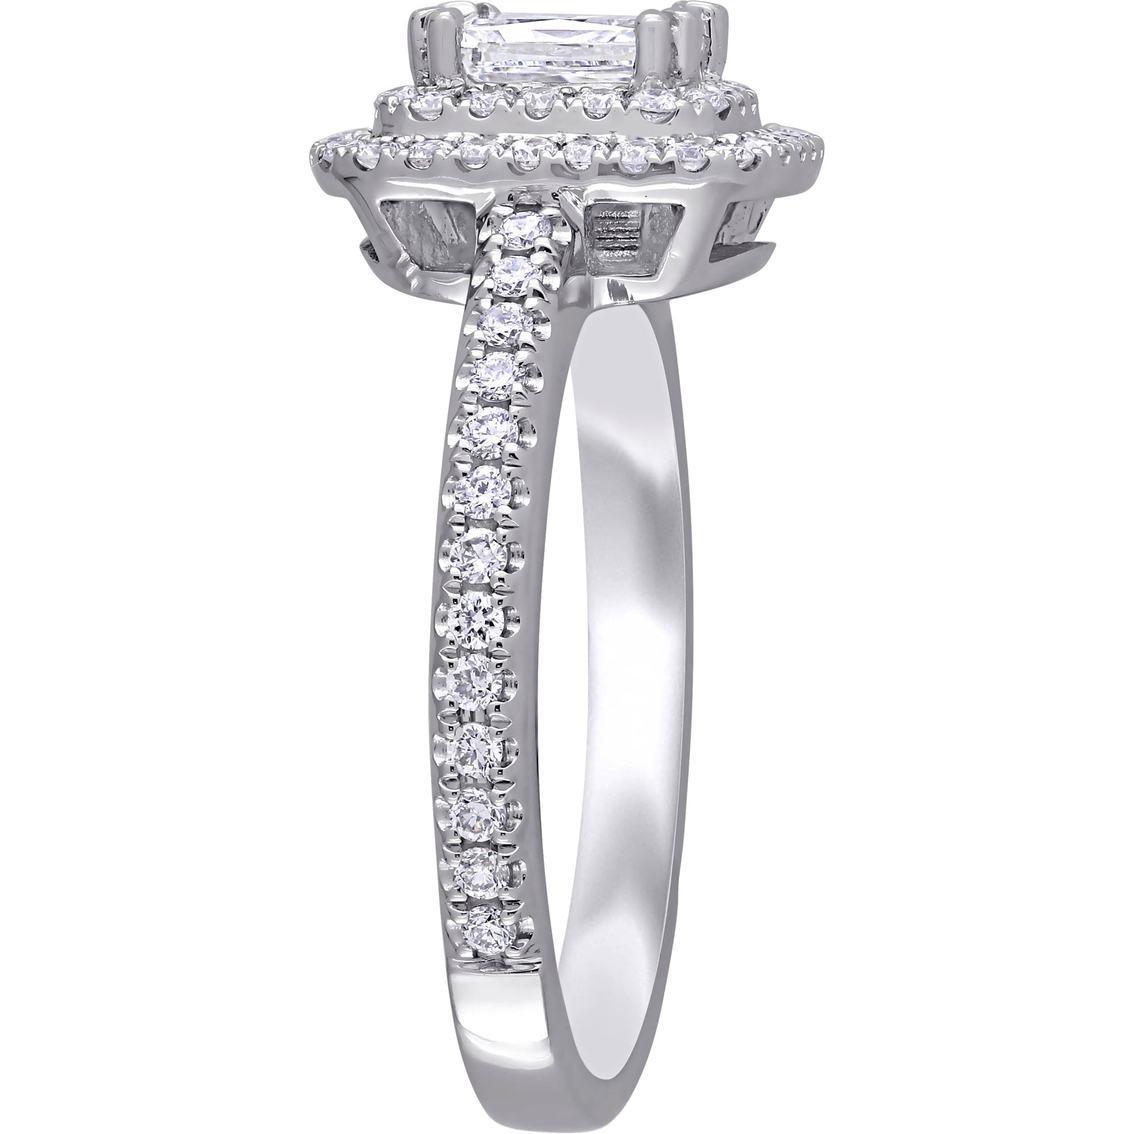 Diamore 14K White Gold 1 CTW Diamond Radiant Cut Double Halo Engagement Ring - Image 2 of 4